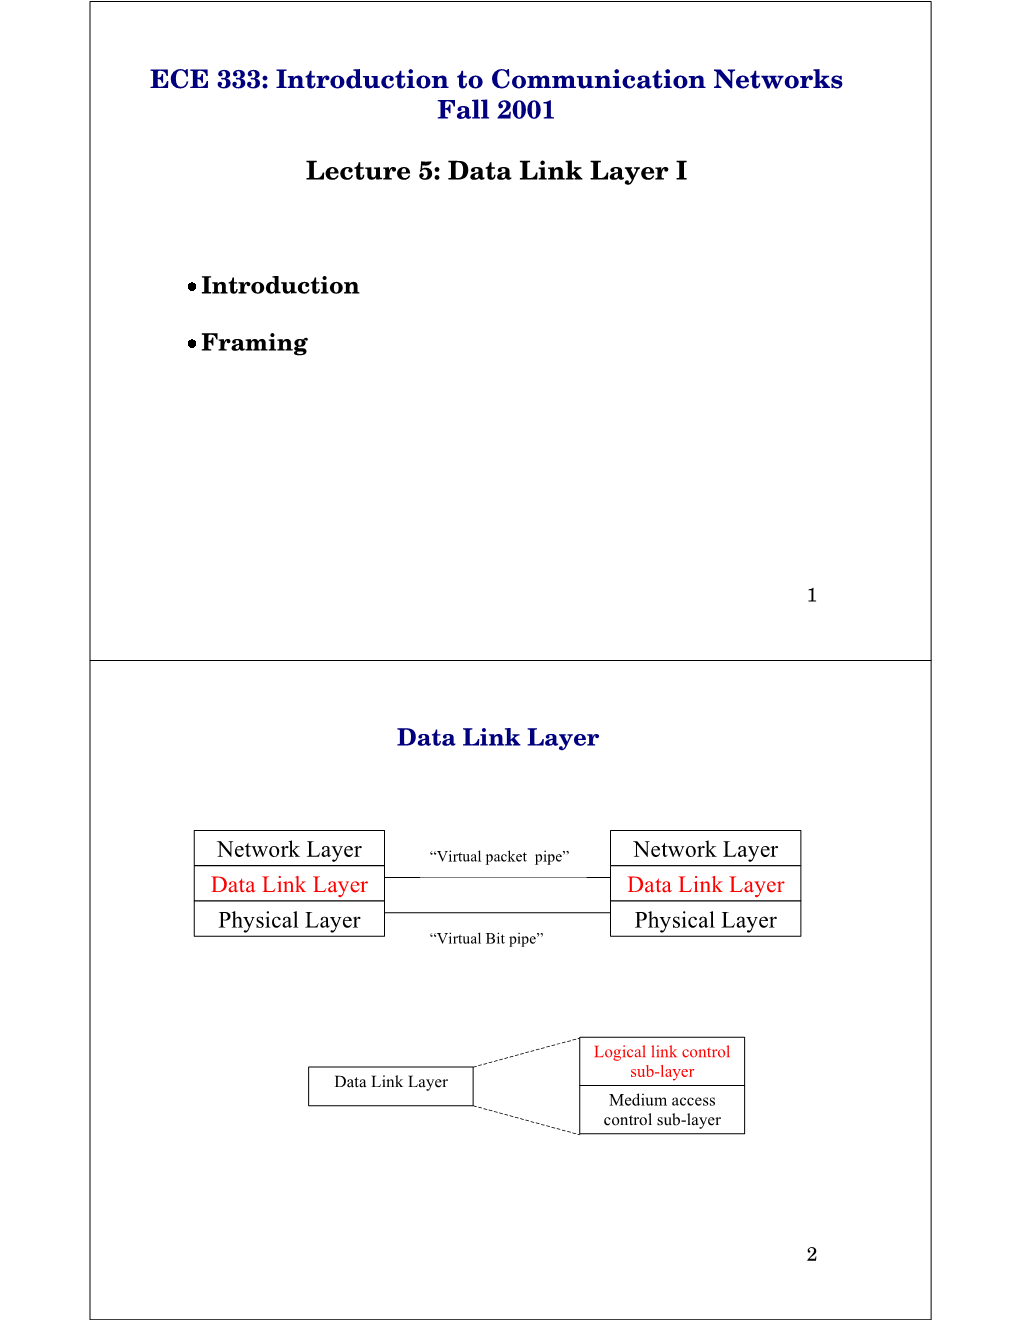 Data Link Layer I